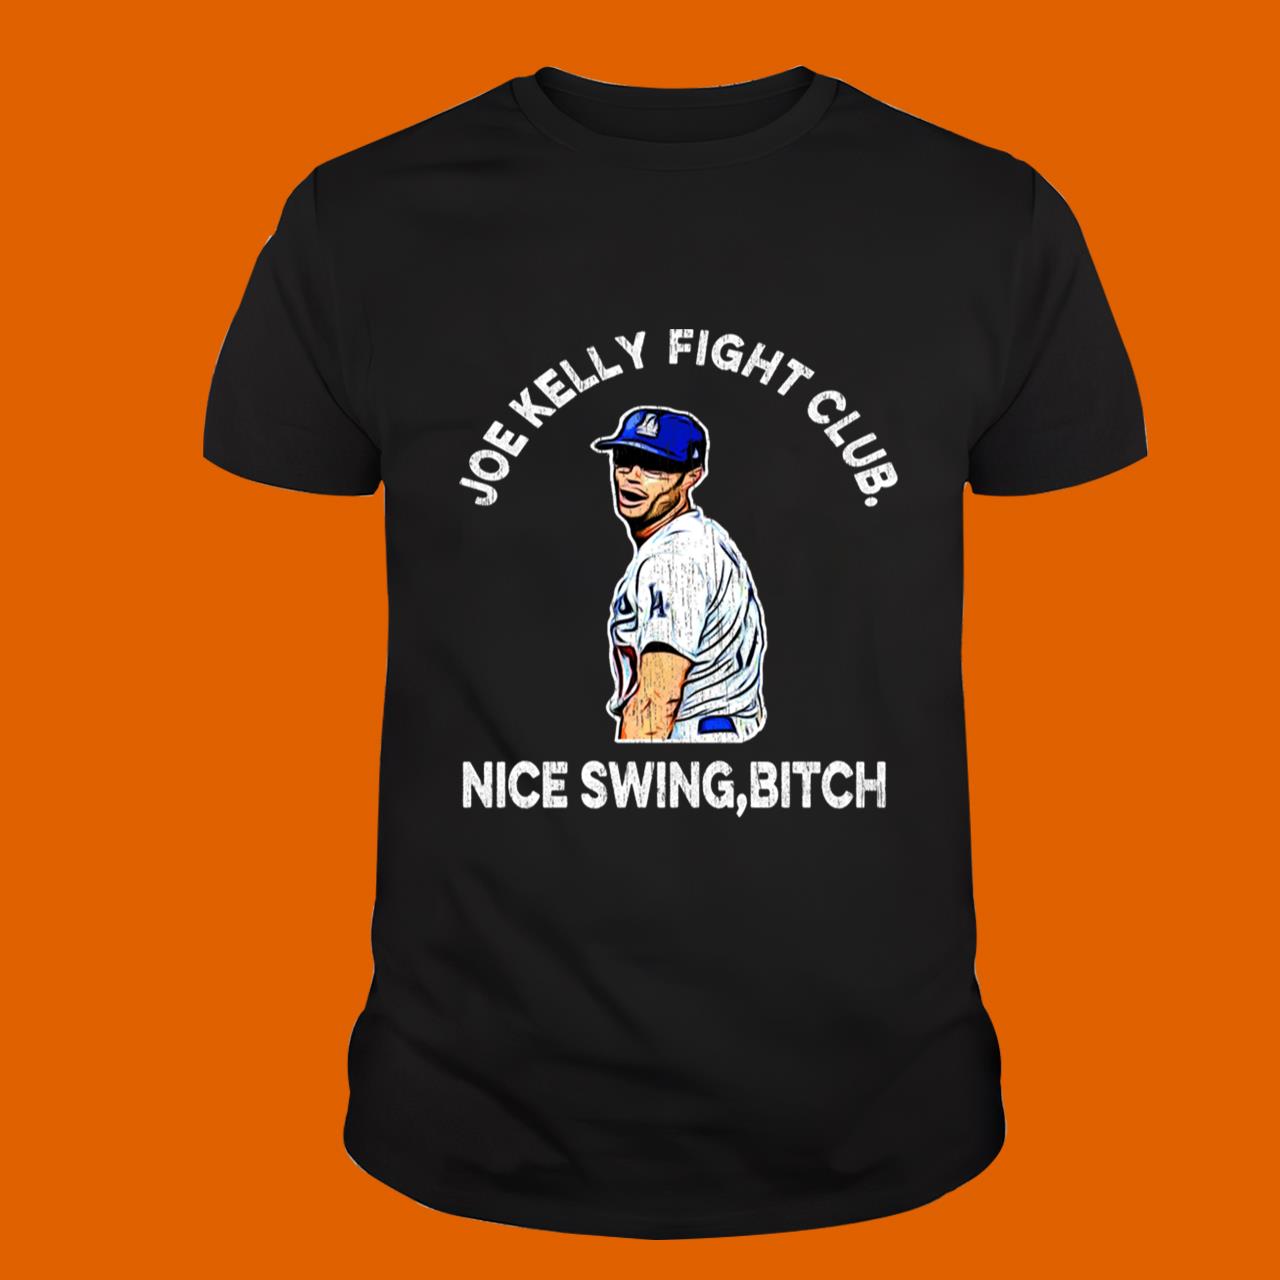 Joe Kelly Fight Club – Nice Swing Bitch T-Shirt